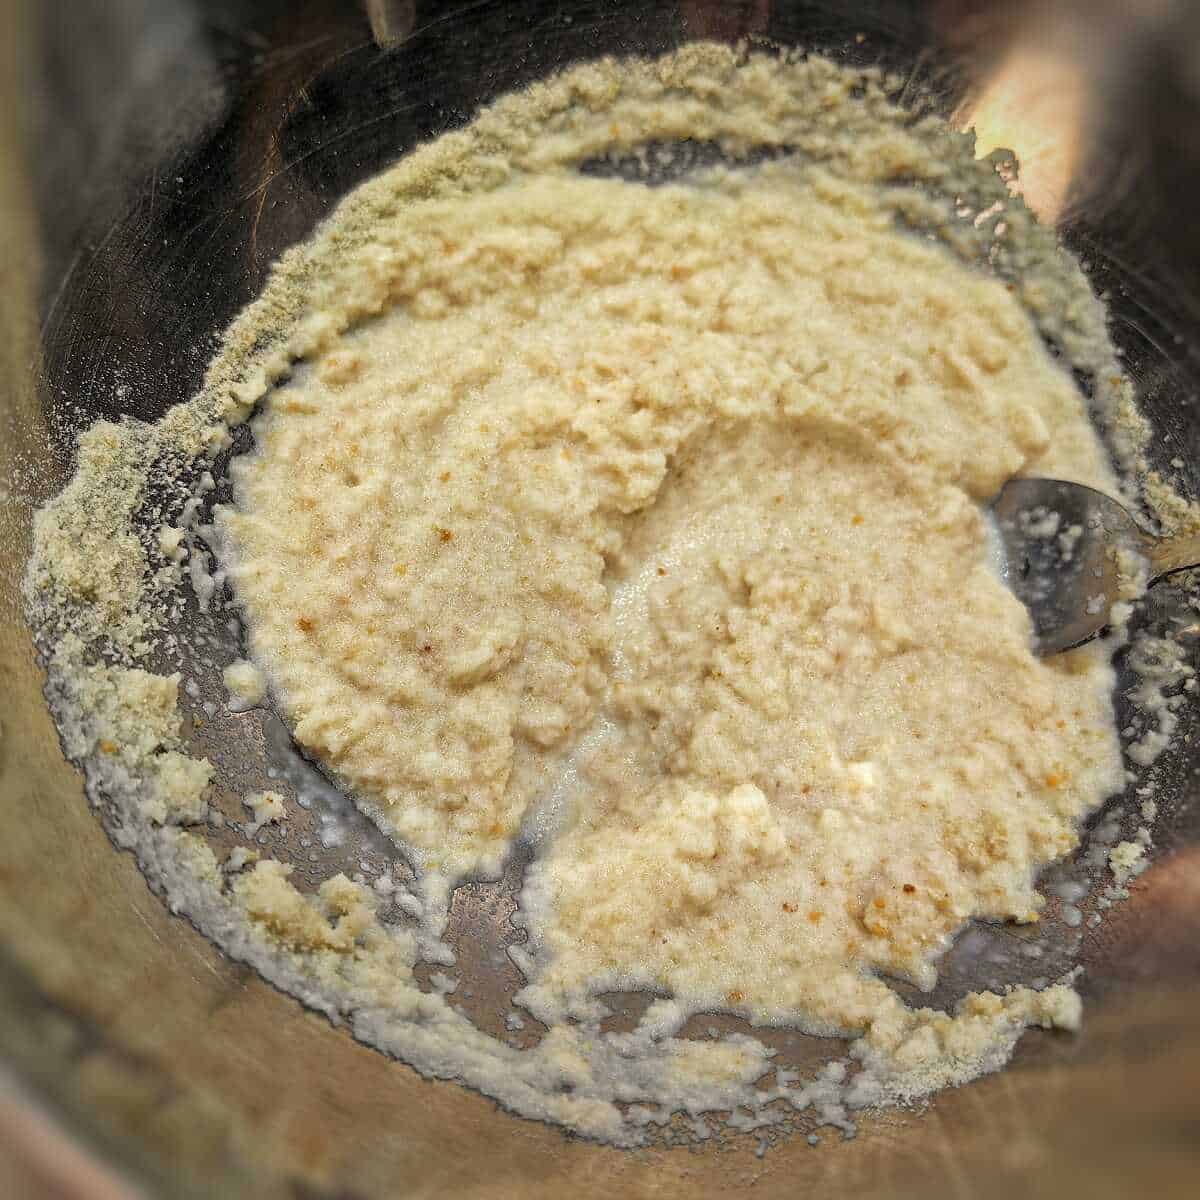 breadcrumbs and milk mixture in a metal bowl